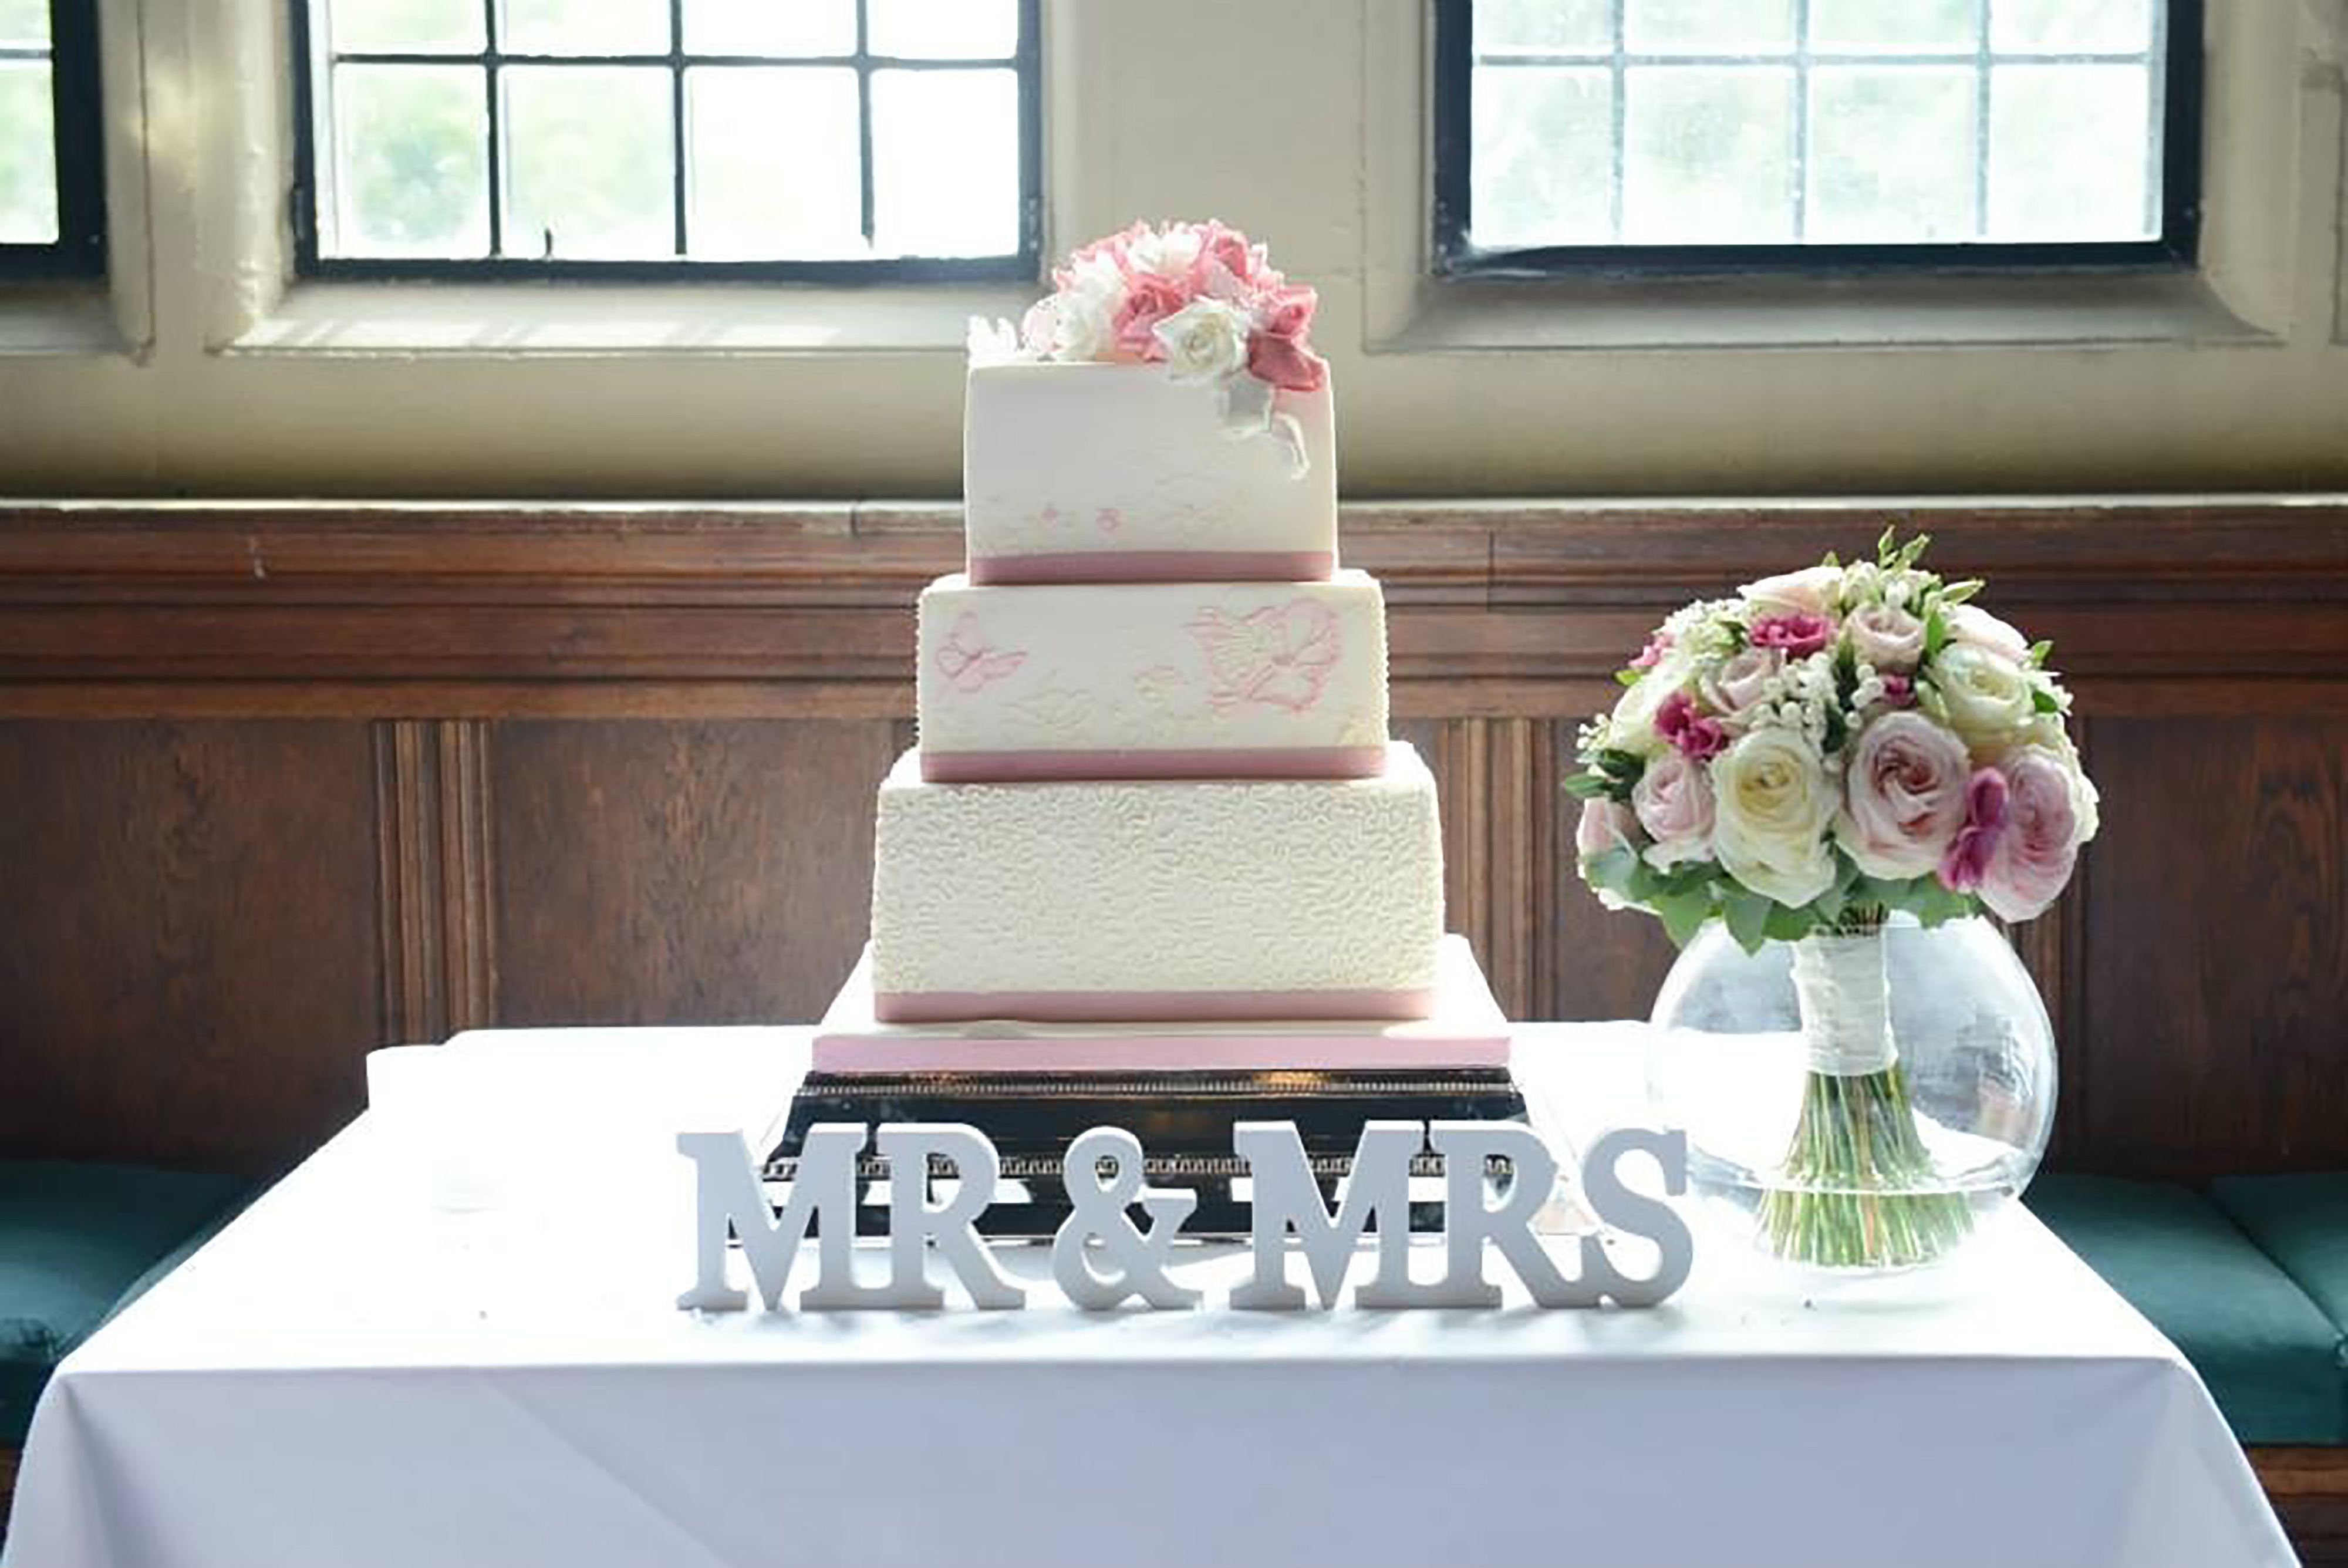 Mr & Mrs pink flower cake